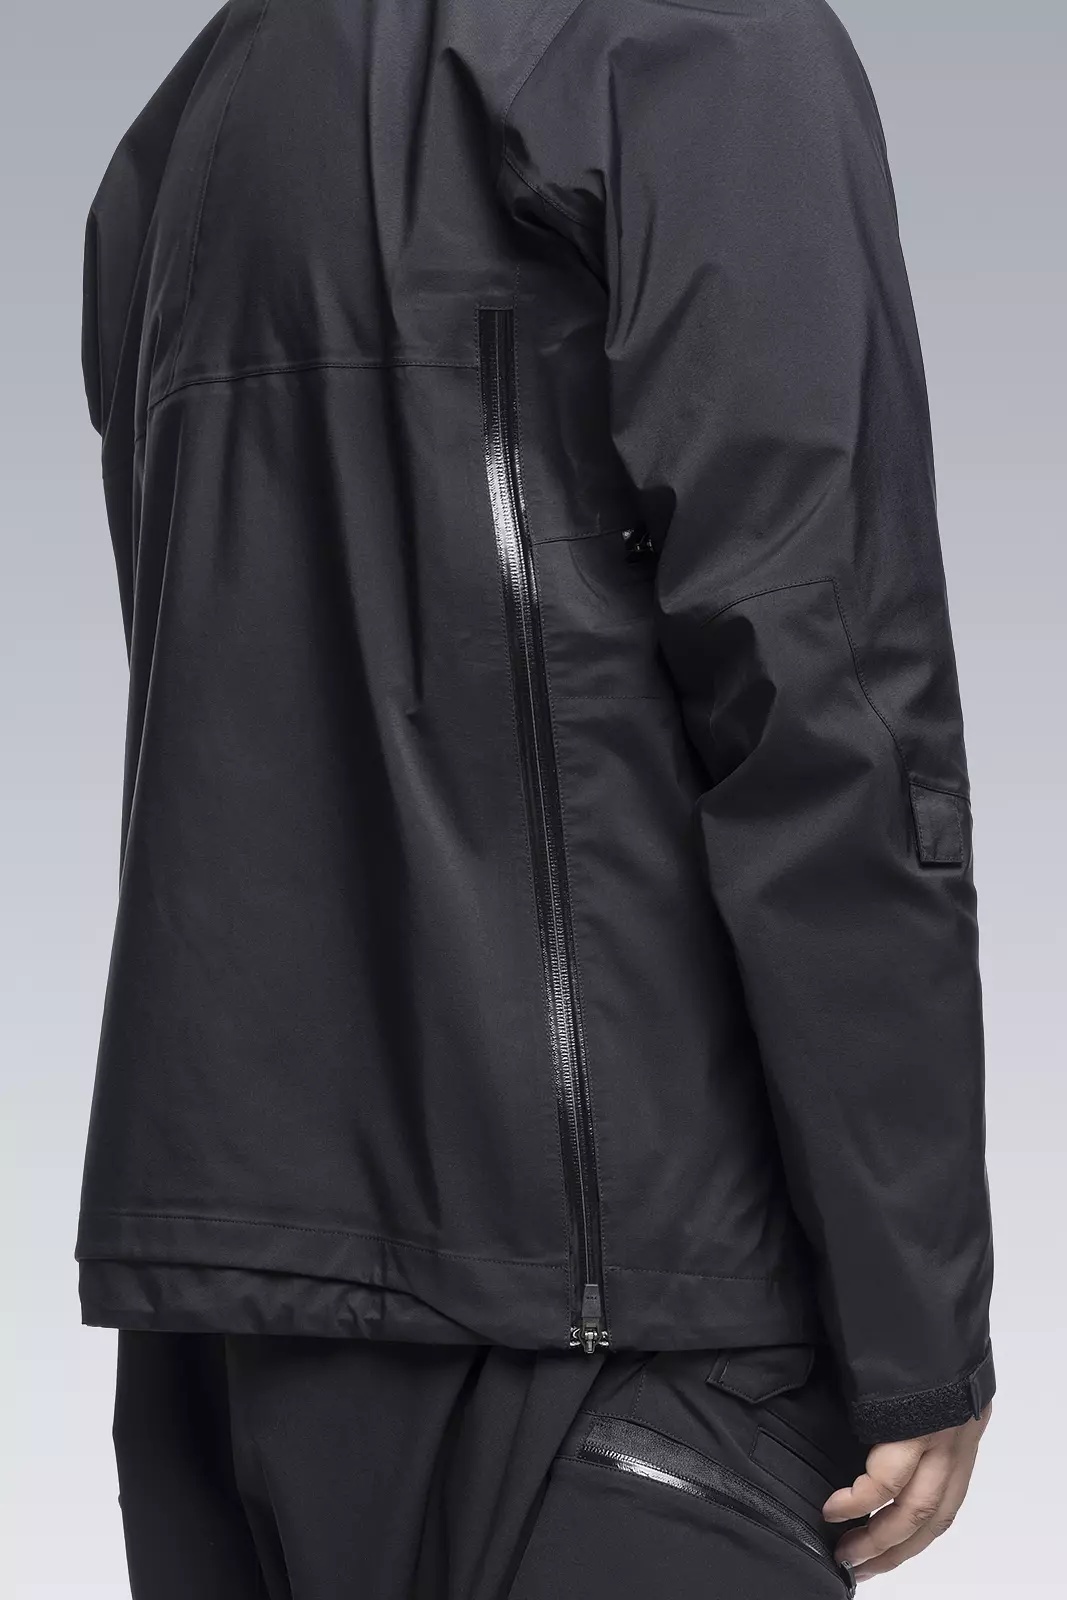 J1A-GTKR-BKS KR EX 3L Gore-Tex® Pro Interops Jacket Black with size 5 WR zippers in gloss black - 35